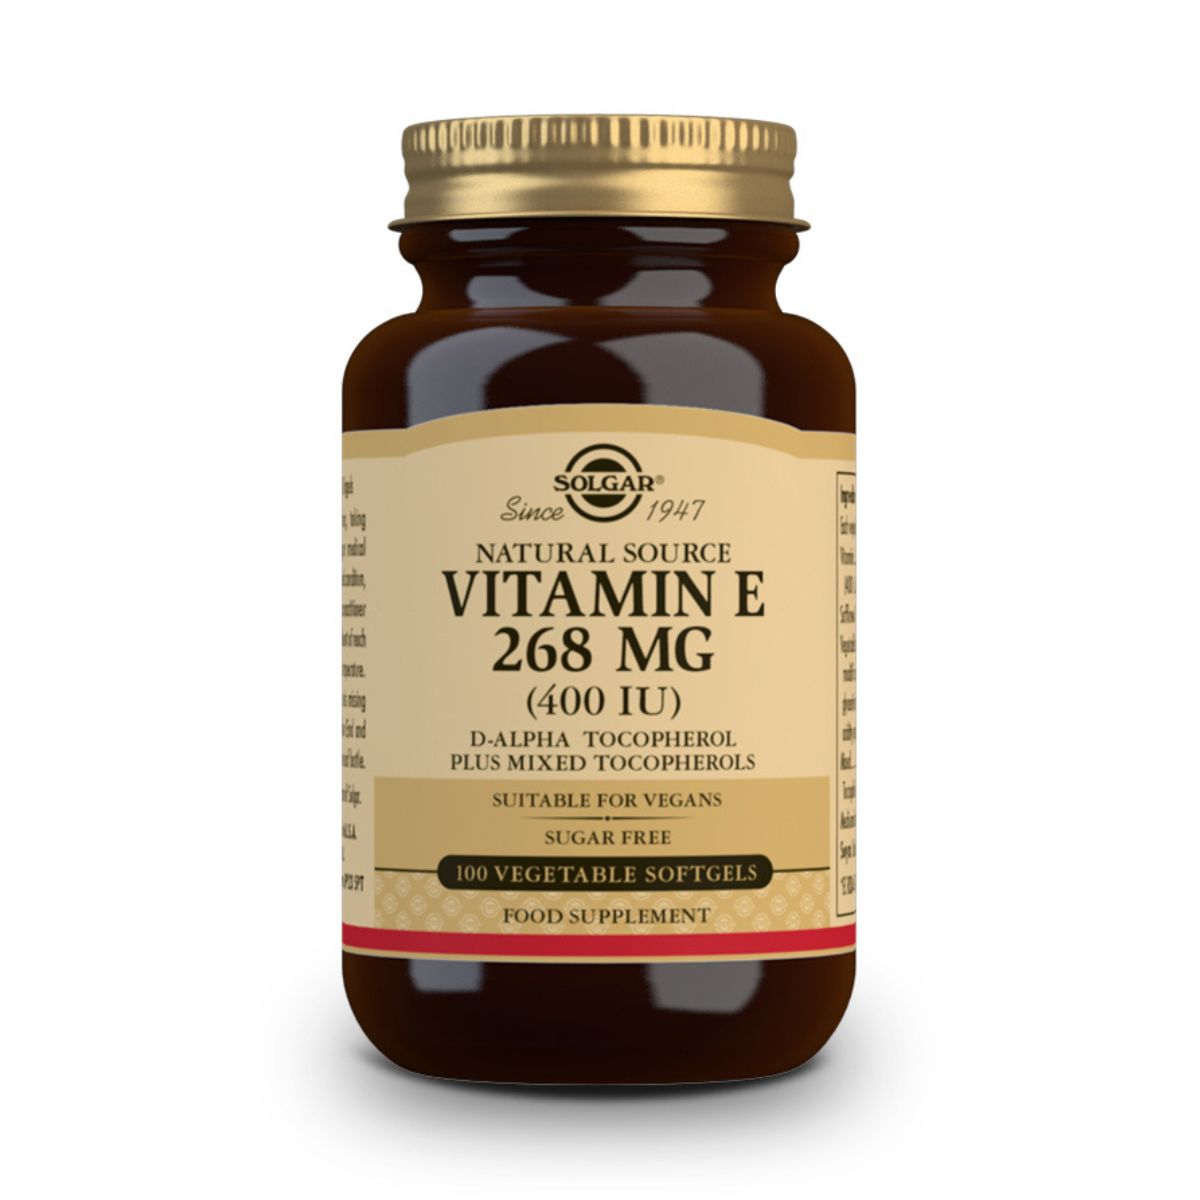 Vitamina E 400iu -268 mg- 100 Cápsulas Blandas